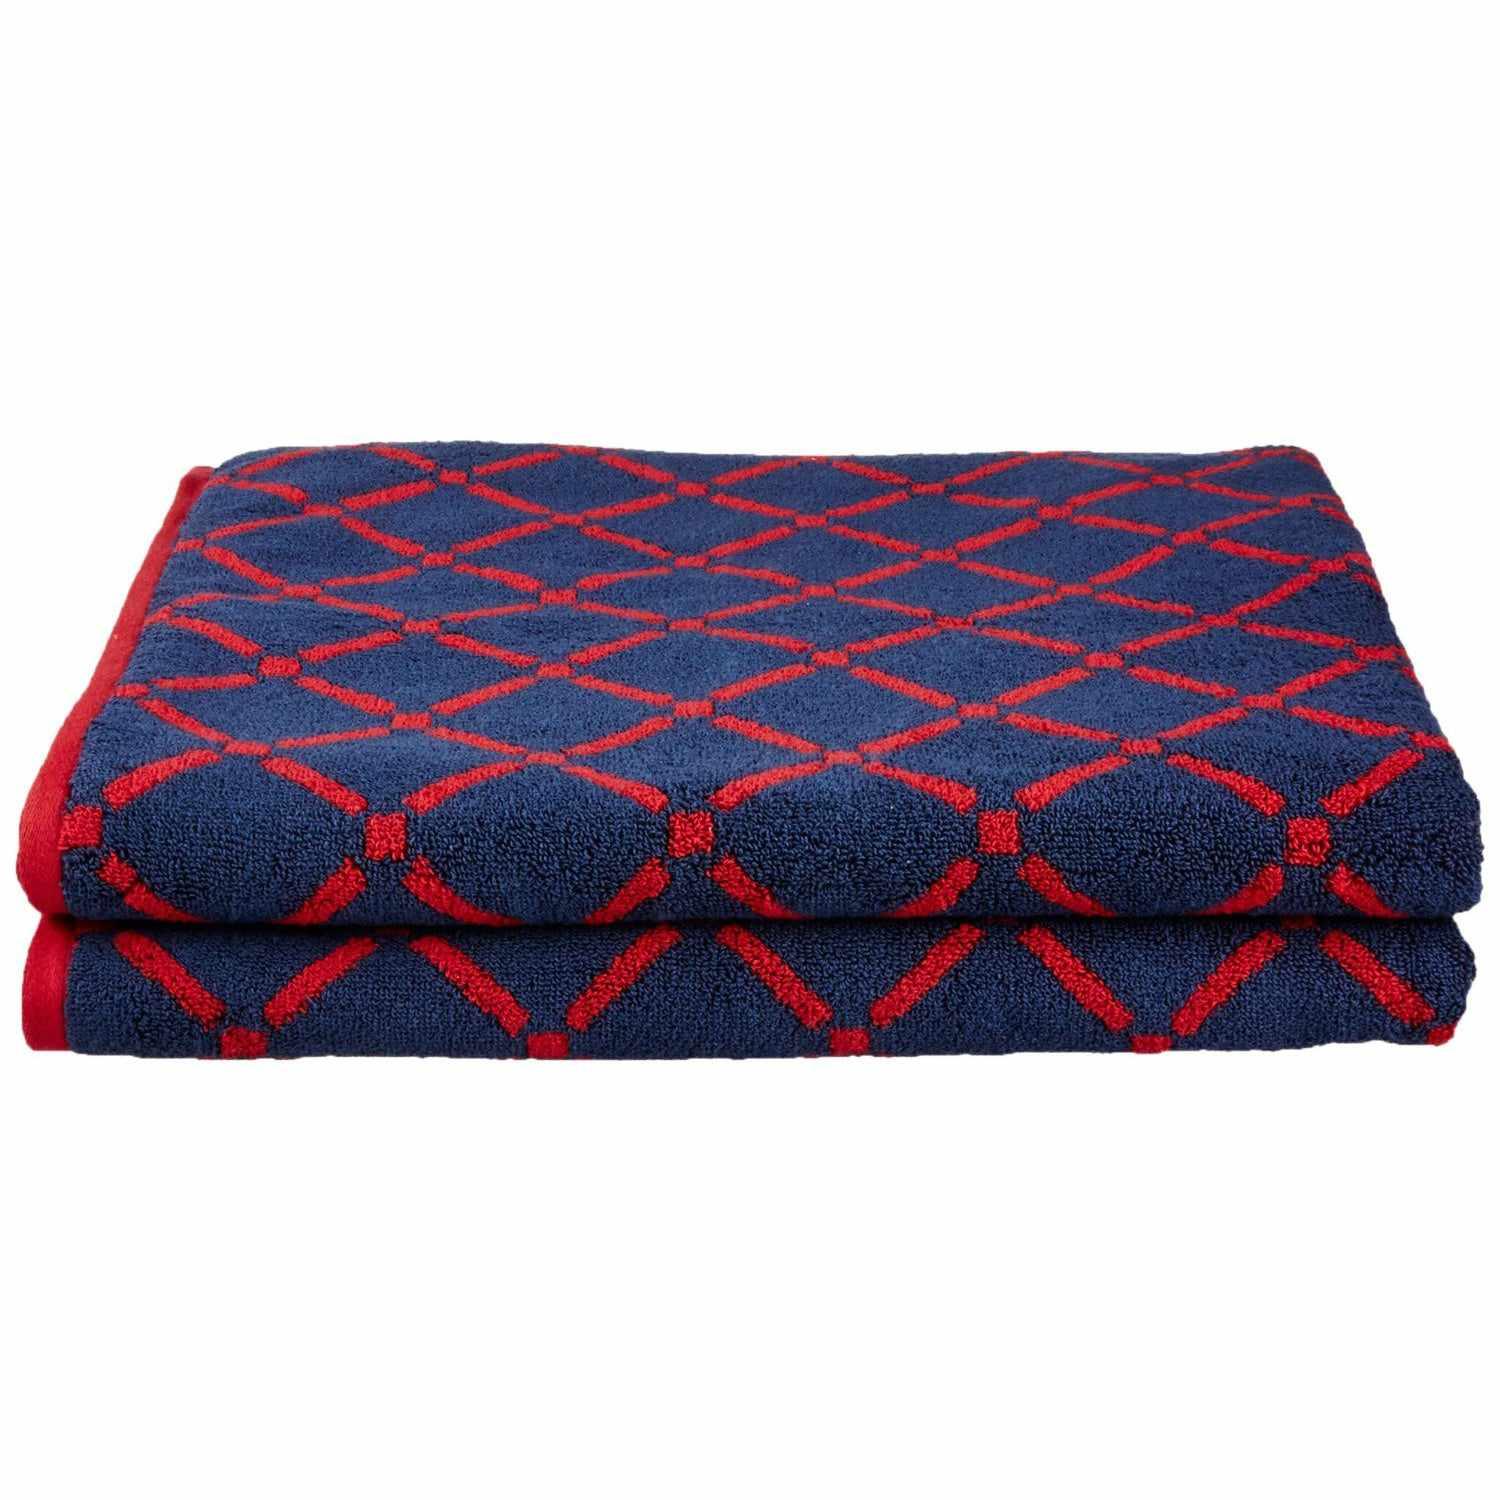 Reversible Diamond Cotton 2-Piece Bath Towel Set - Red/Navy Blue